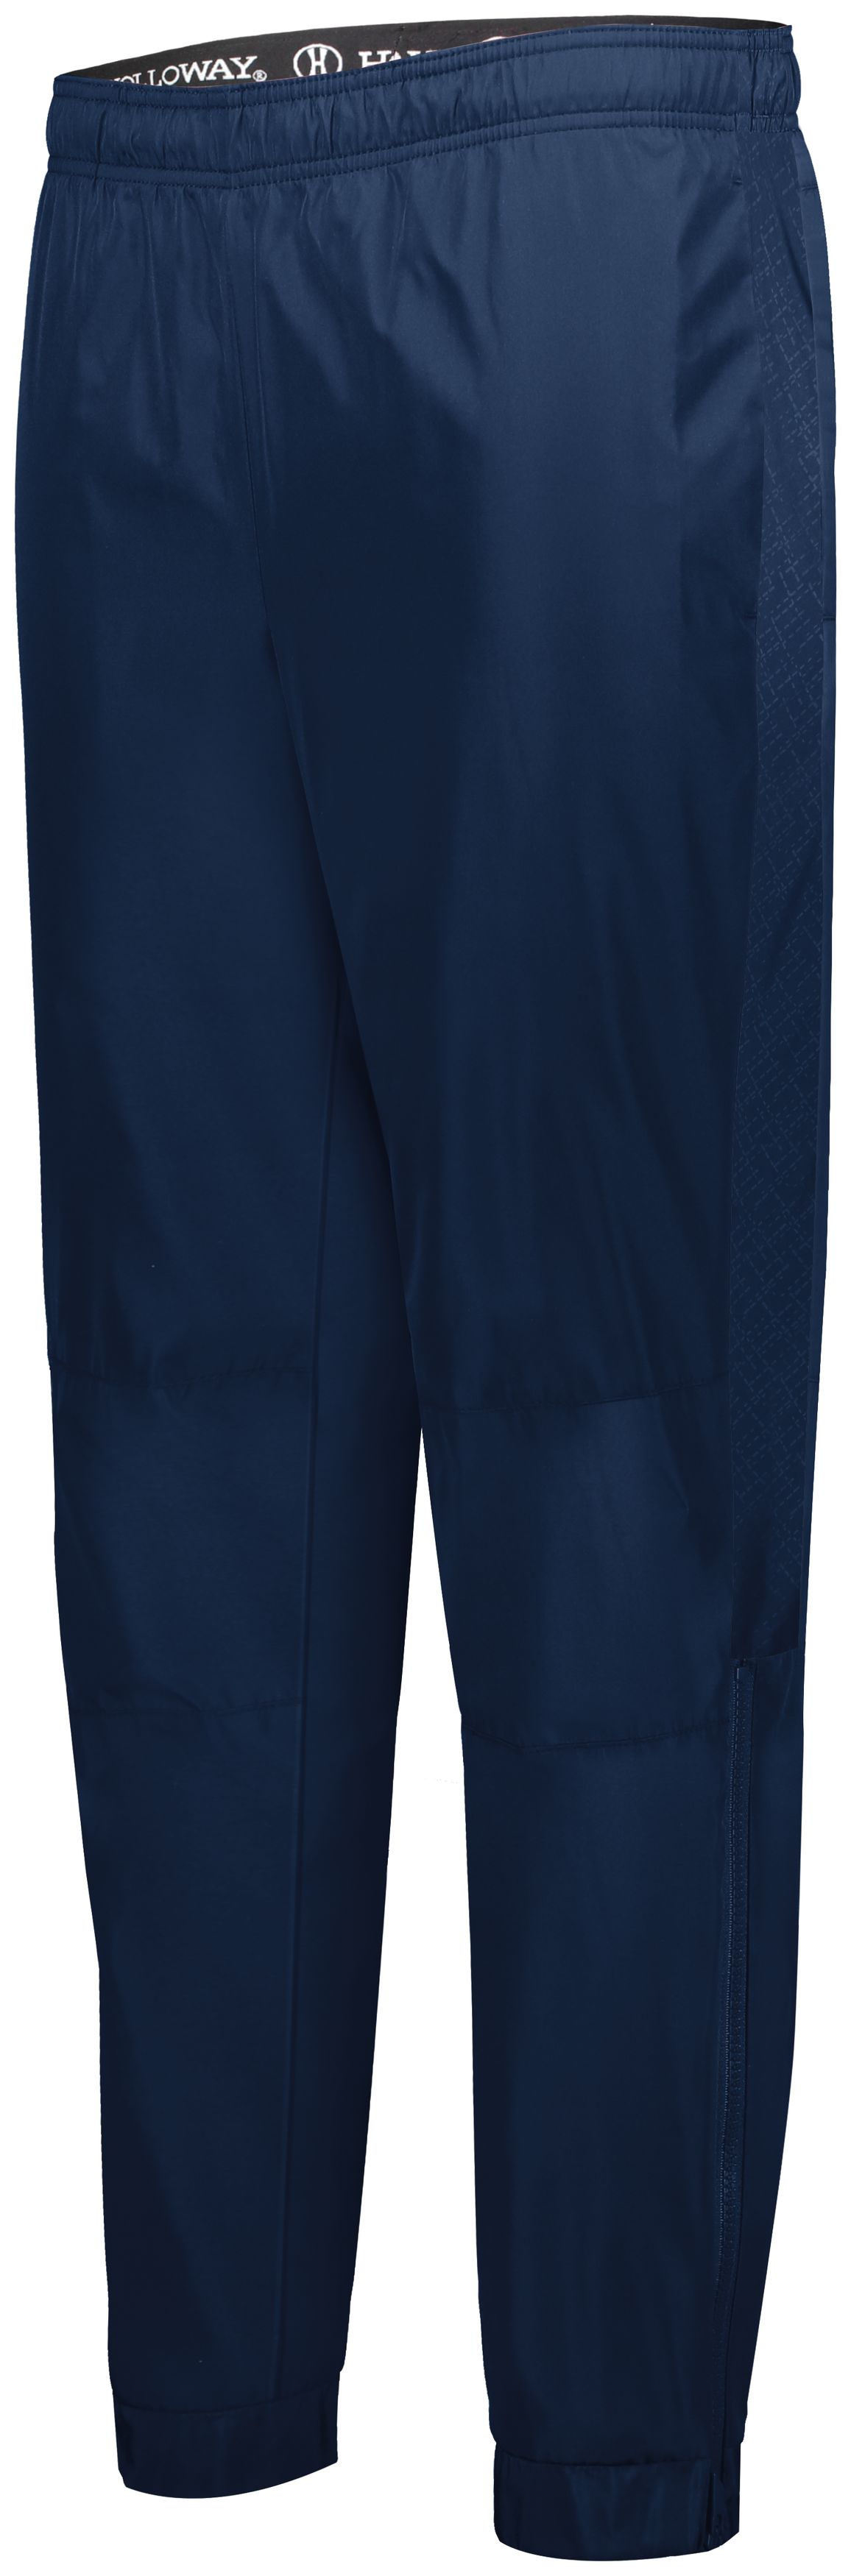 Top Pull Up Pants Adult Unisex XL (41''-61'') 10's - myCK